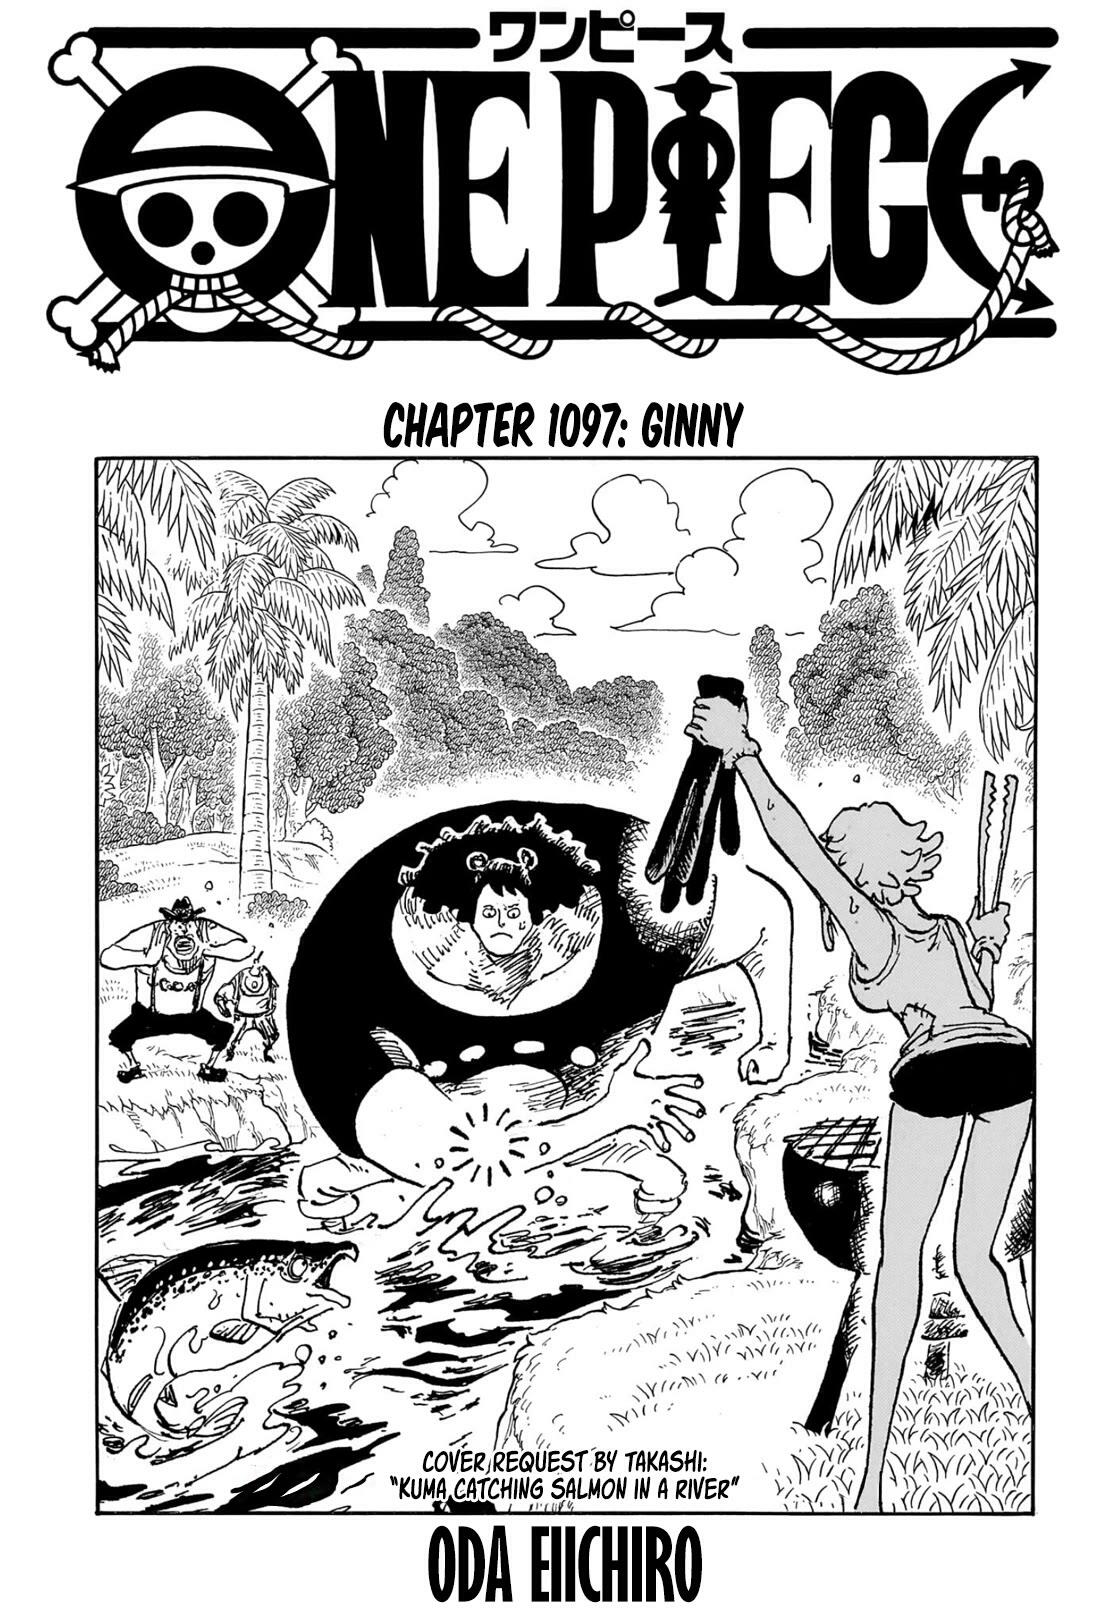 Read One Piece Chapter 462 : Oz S Adventure on Mangakakalot